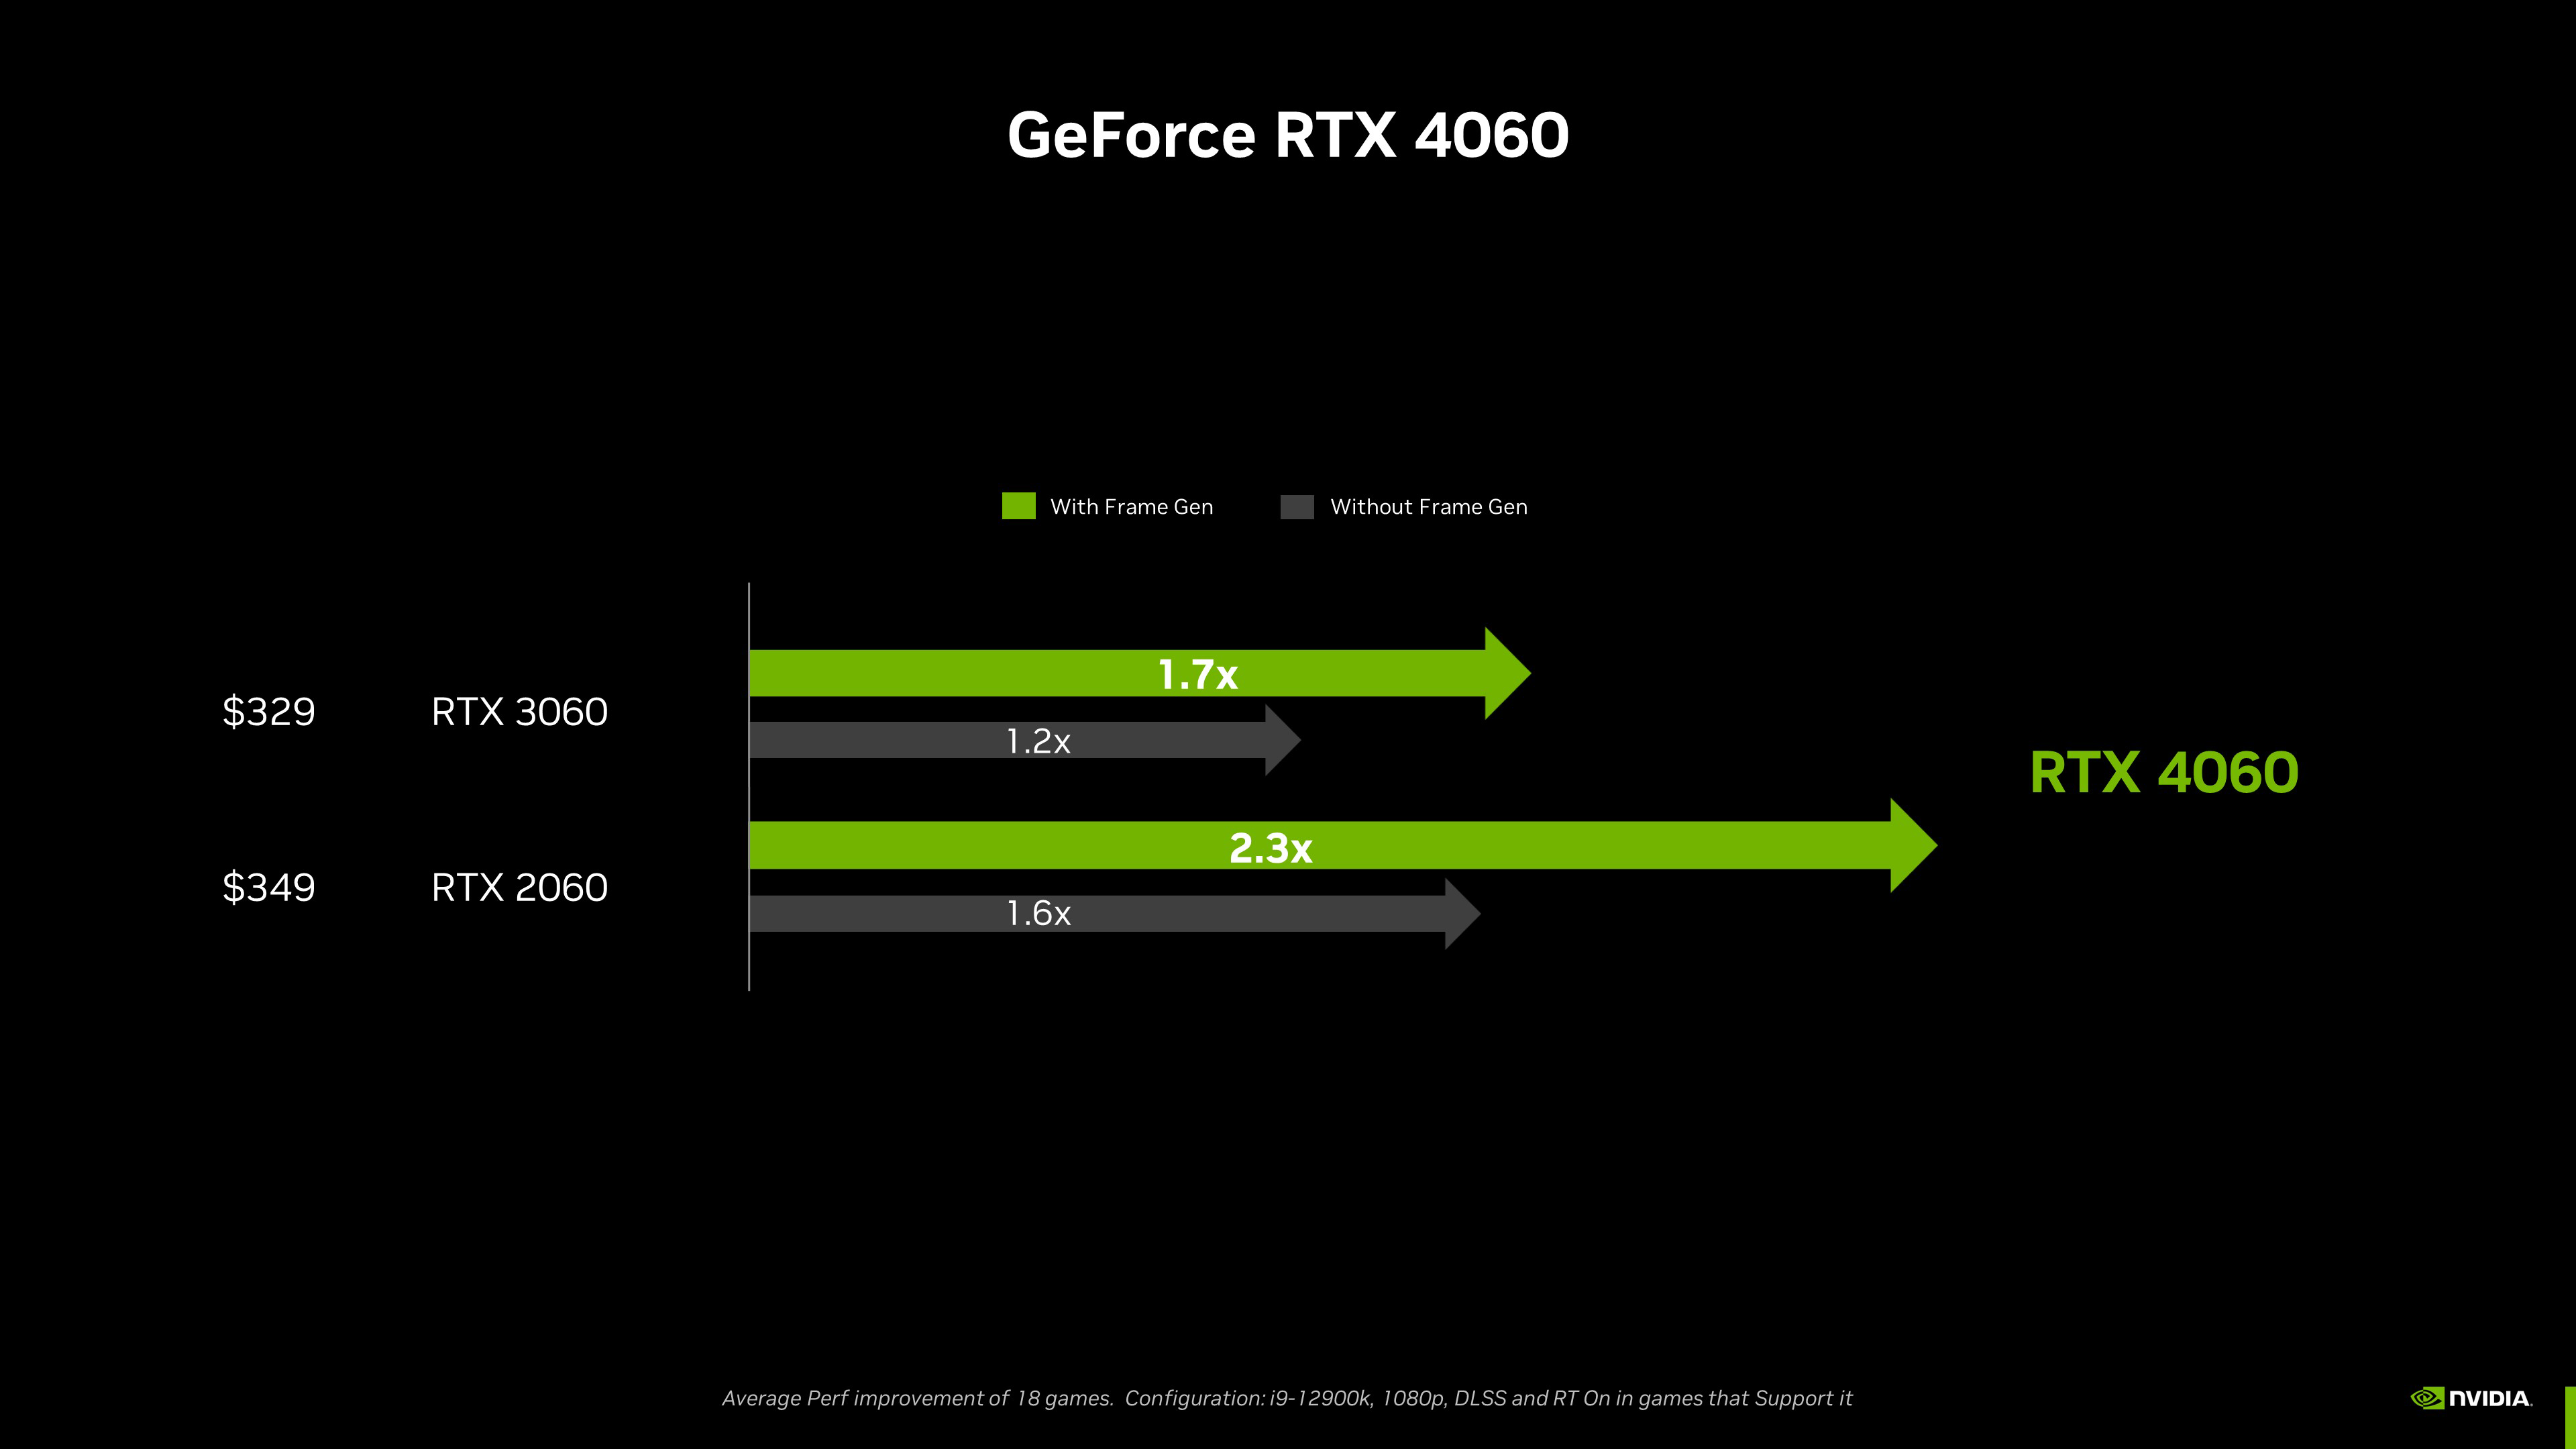 nvidia-geforce-rtx-4060-generational-performance-improvements.png